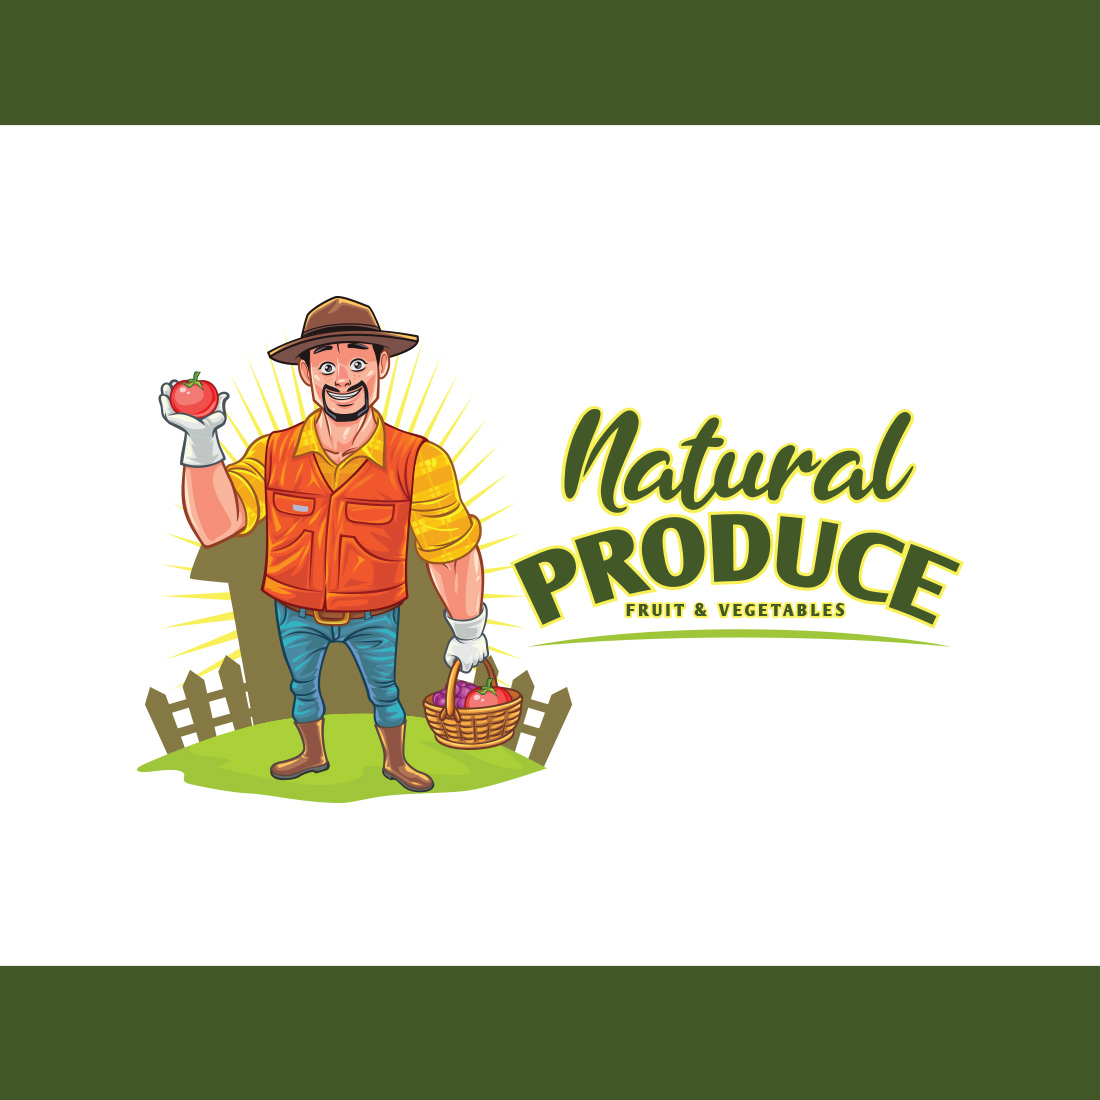 Natural Produce - Farmer Mascot Logo Design cover image.